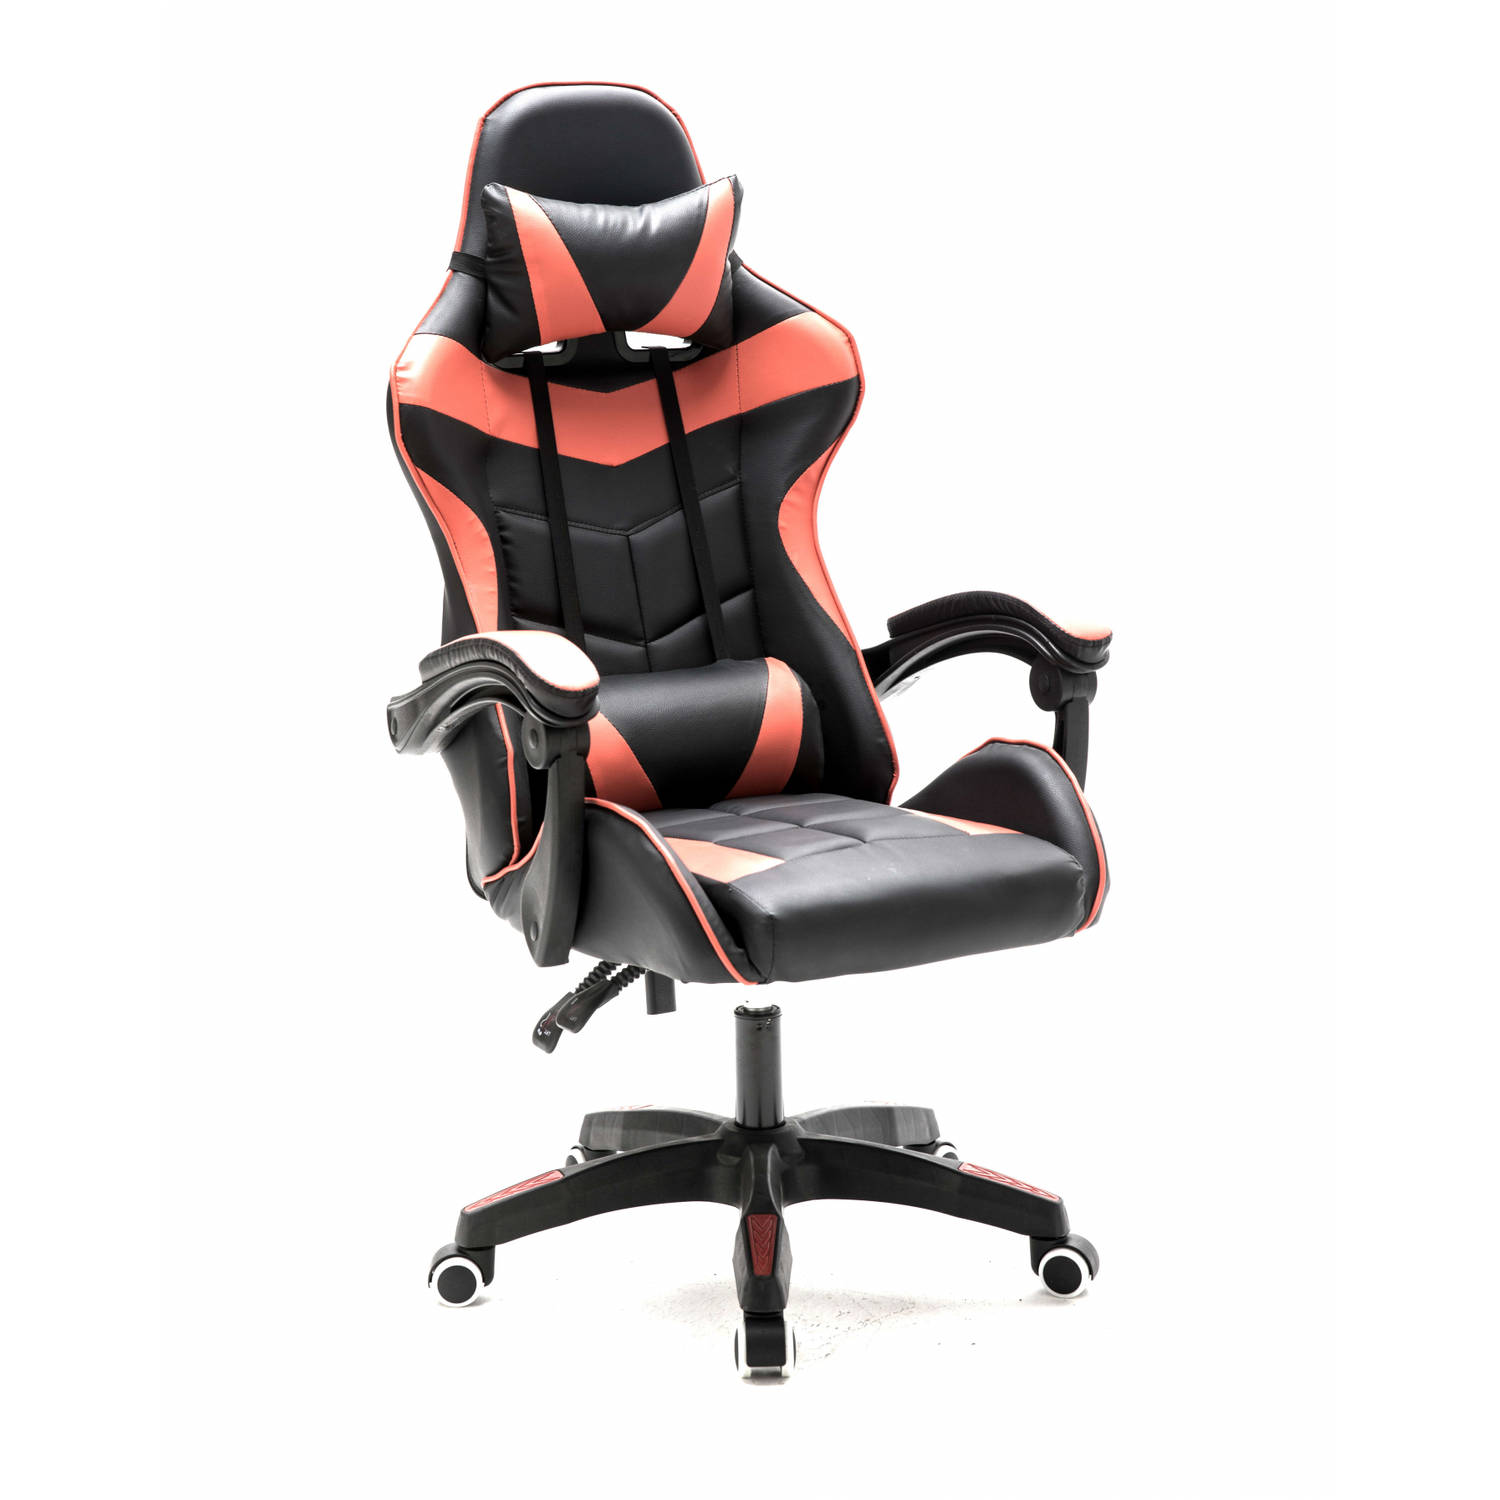 Verbinding ga verder Adverteerder Gamestoel Cyclone tieners - bureaustoel - racing gaming stoel - rood zwart  | Blokker